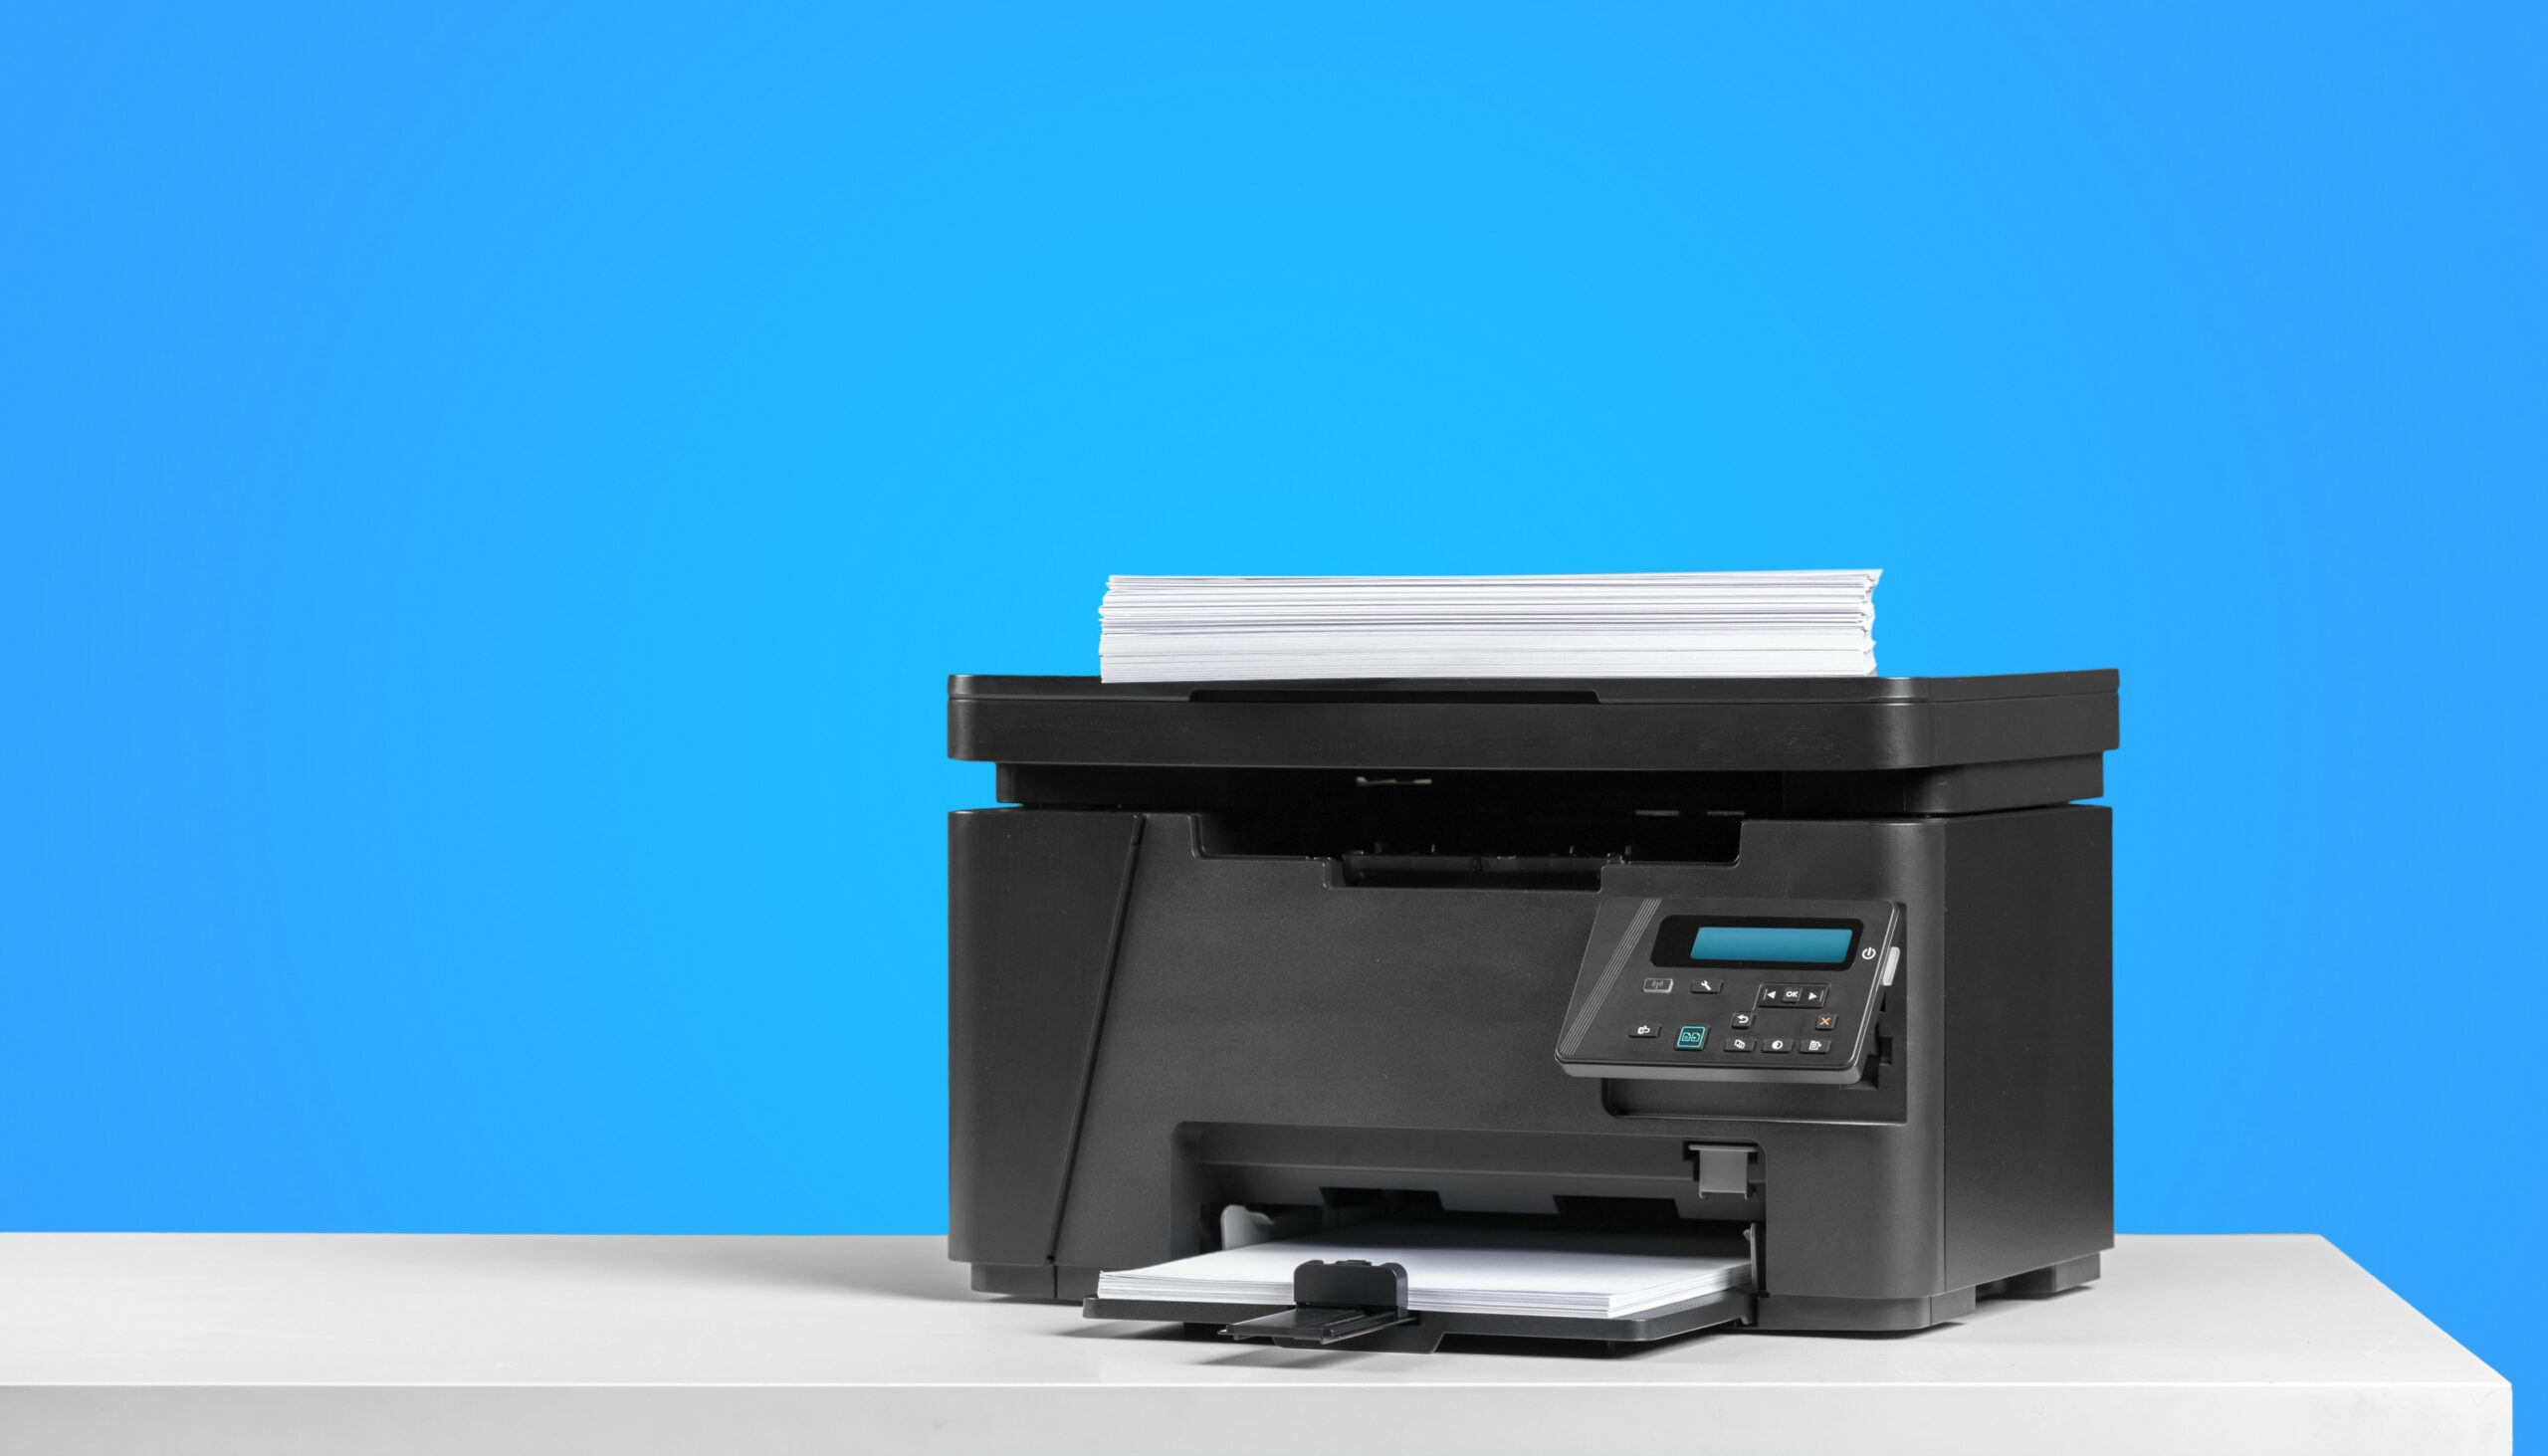 Printer,Copier,Machine,On,A,Bright,Colored,Background